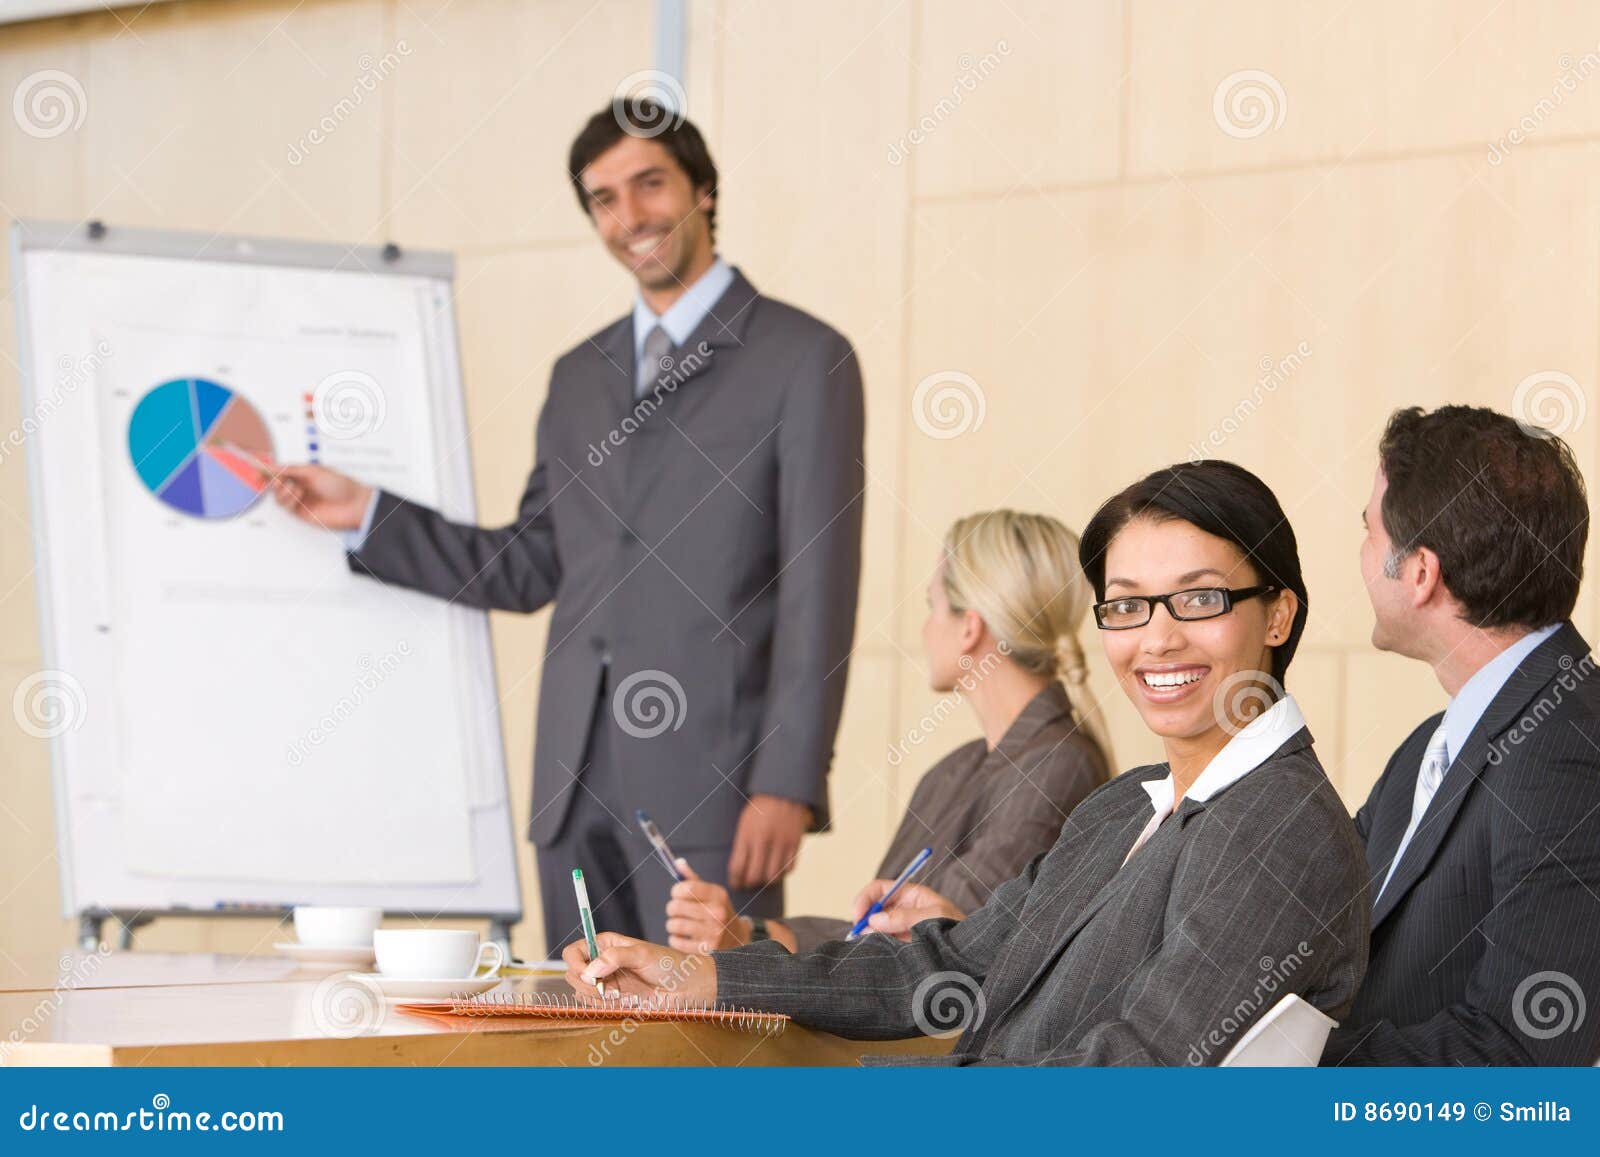 person who presents a presentation